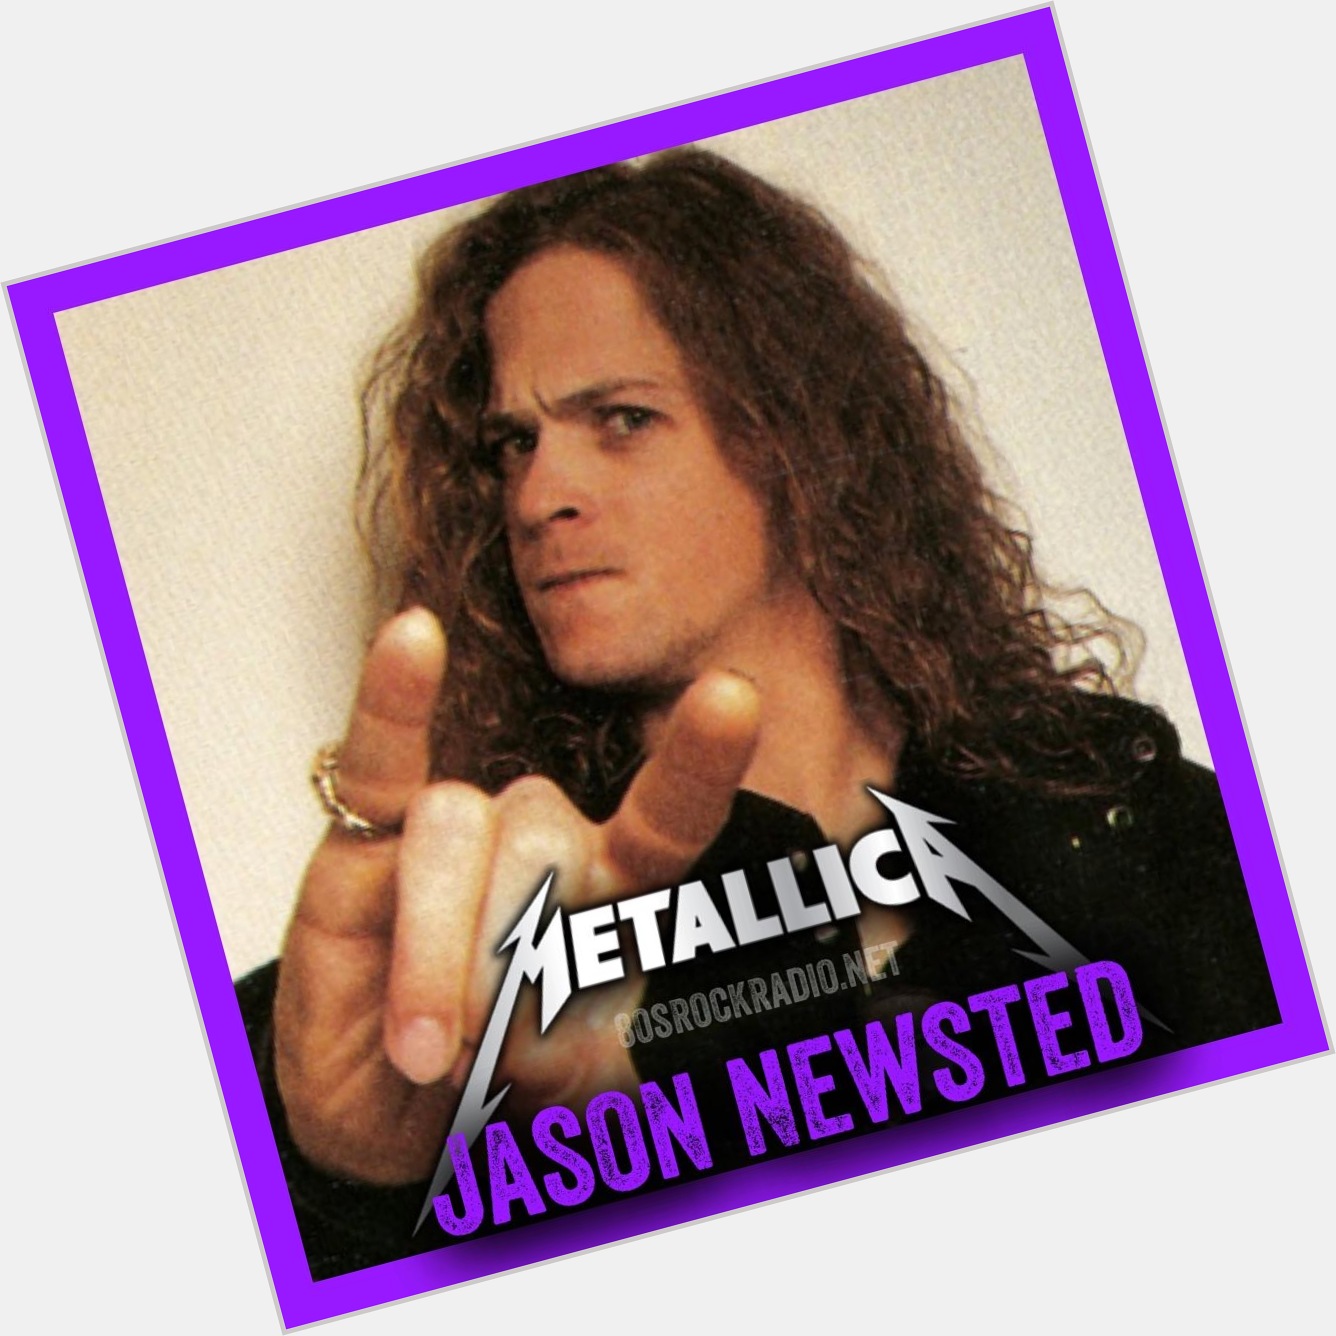 Happy Birthday Jason Newsted
Bassist for Metallica
March, 4, 1963 Battle Creek, Michigan 